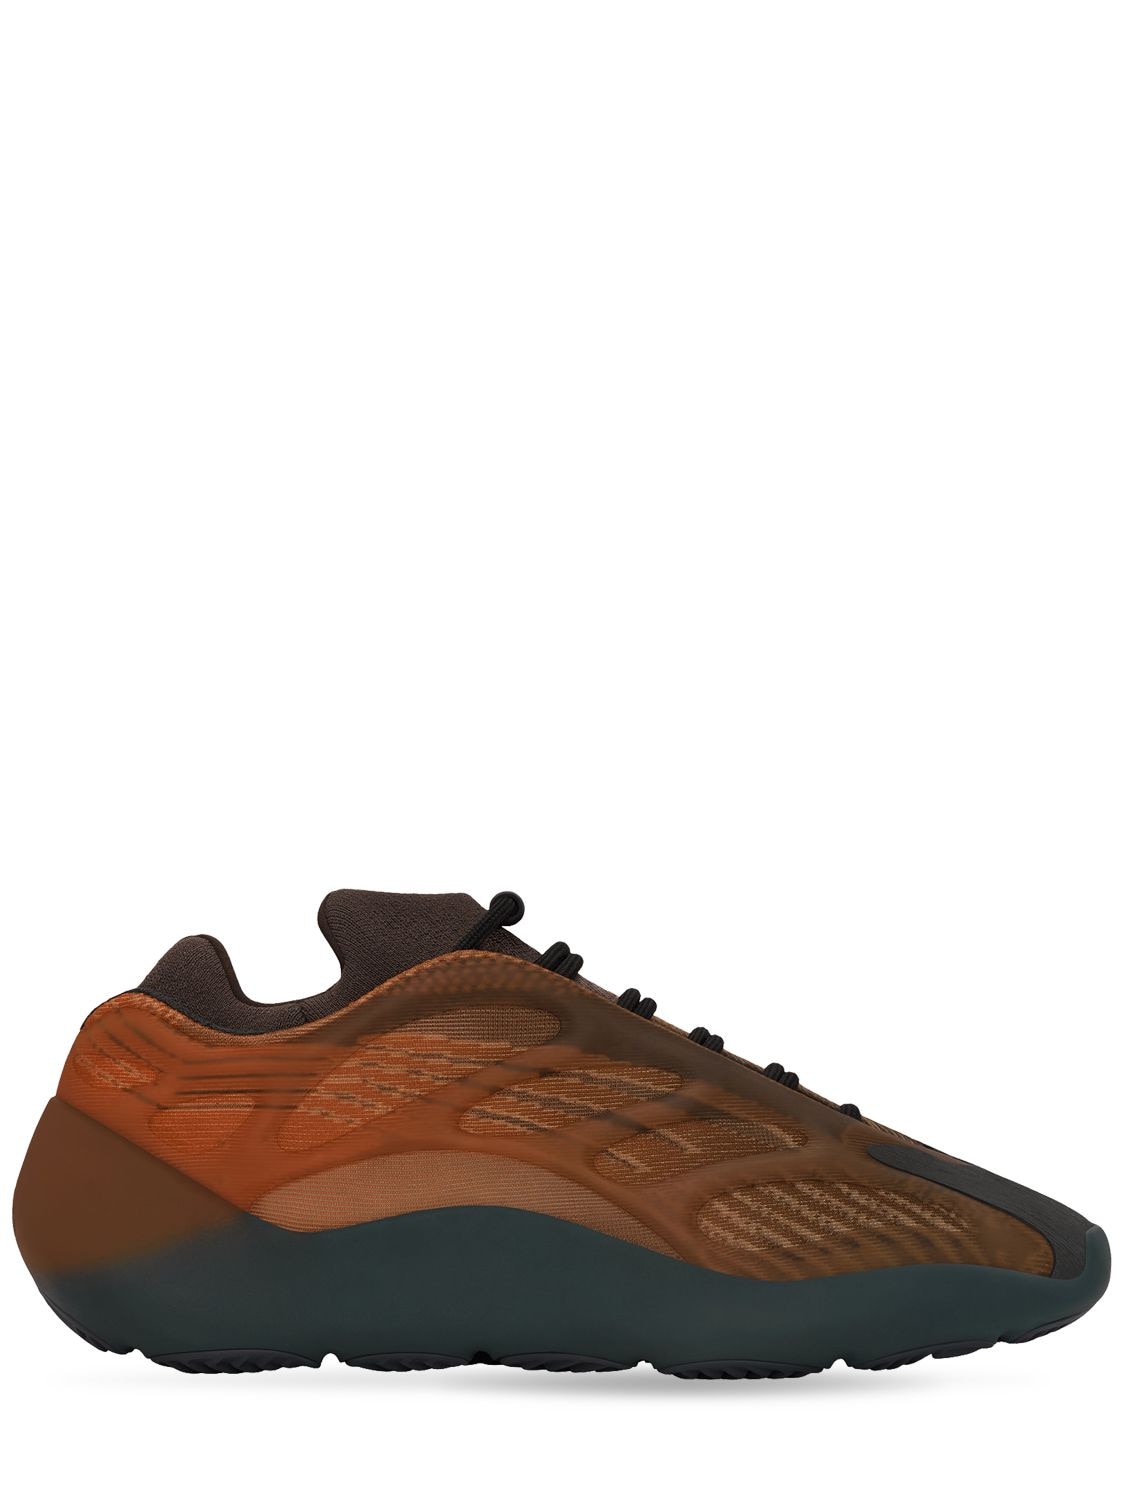 Yeezy 700 V3 Sneakers In Copper Fade